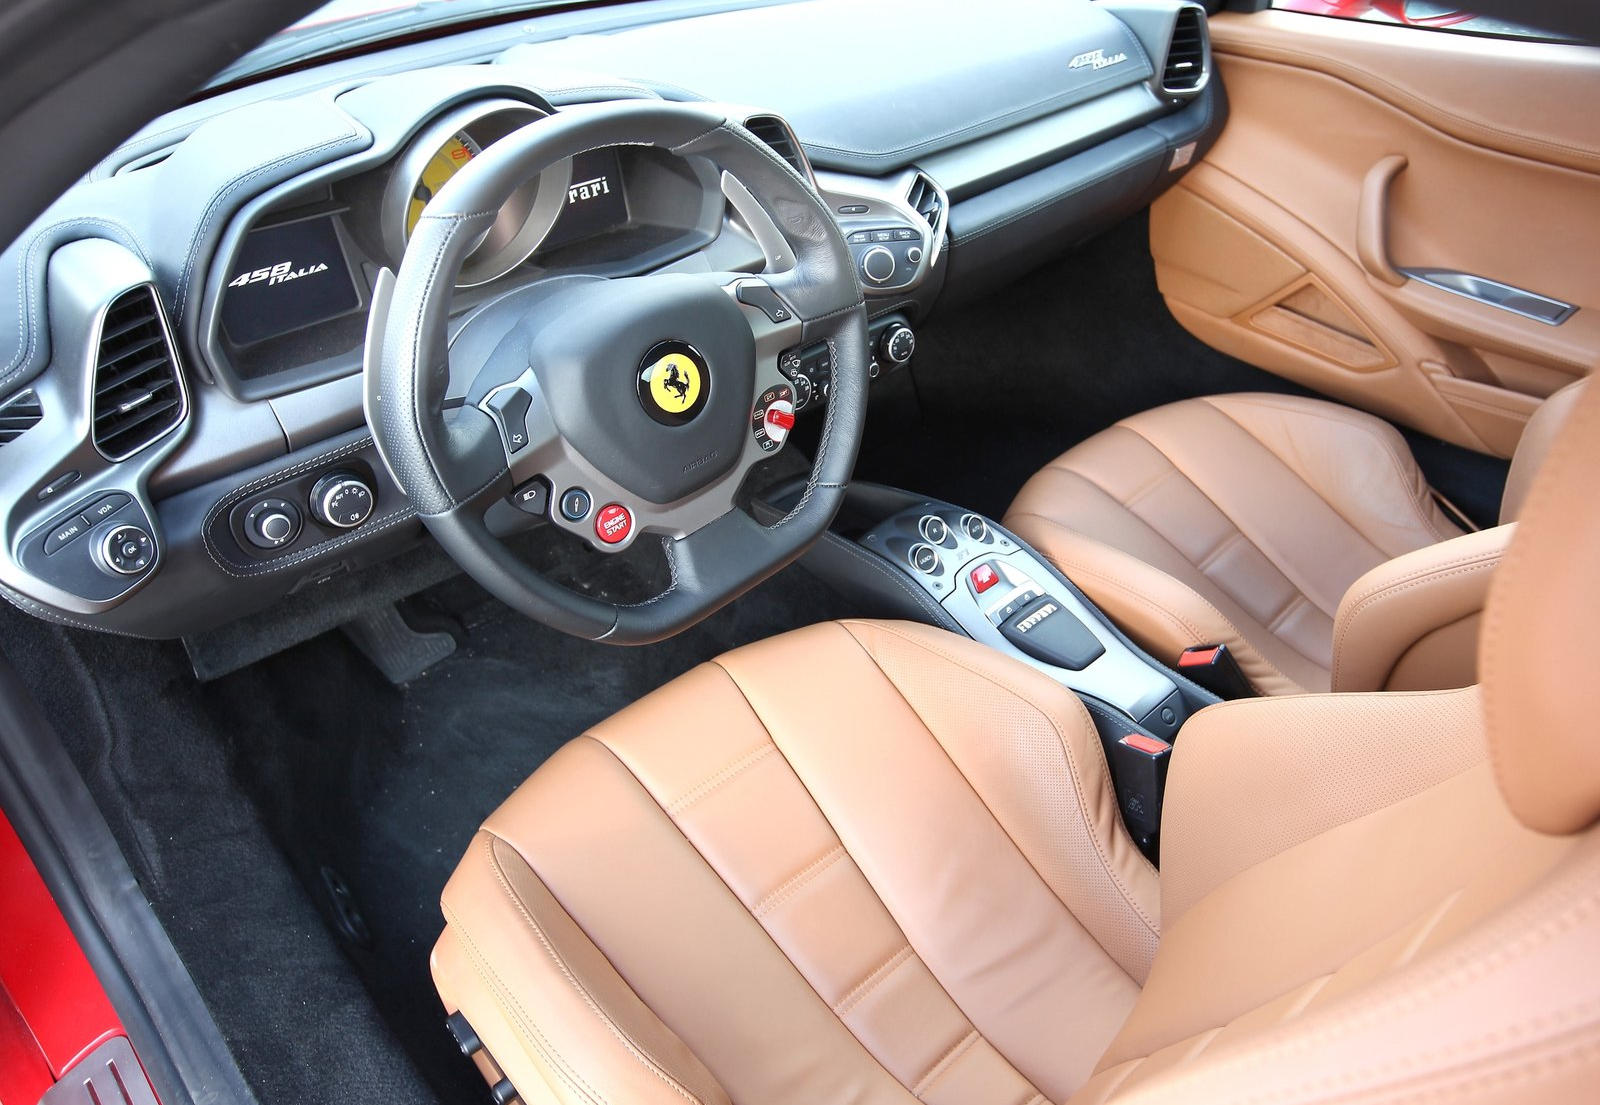 2015 Ferrari 458 Italia Dashboard Carbuzz 586370 1600 